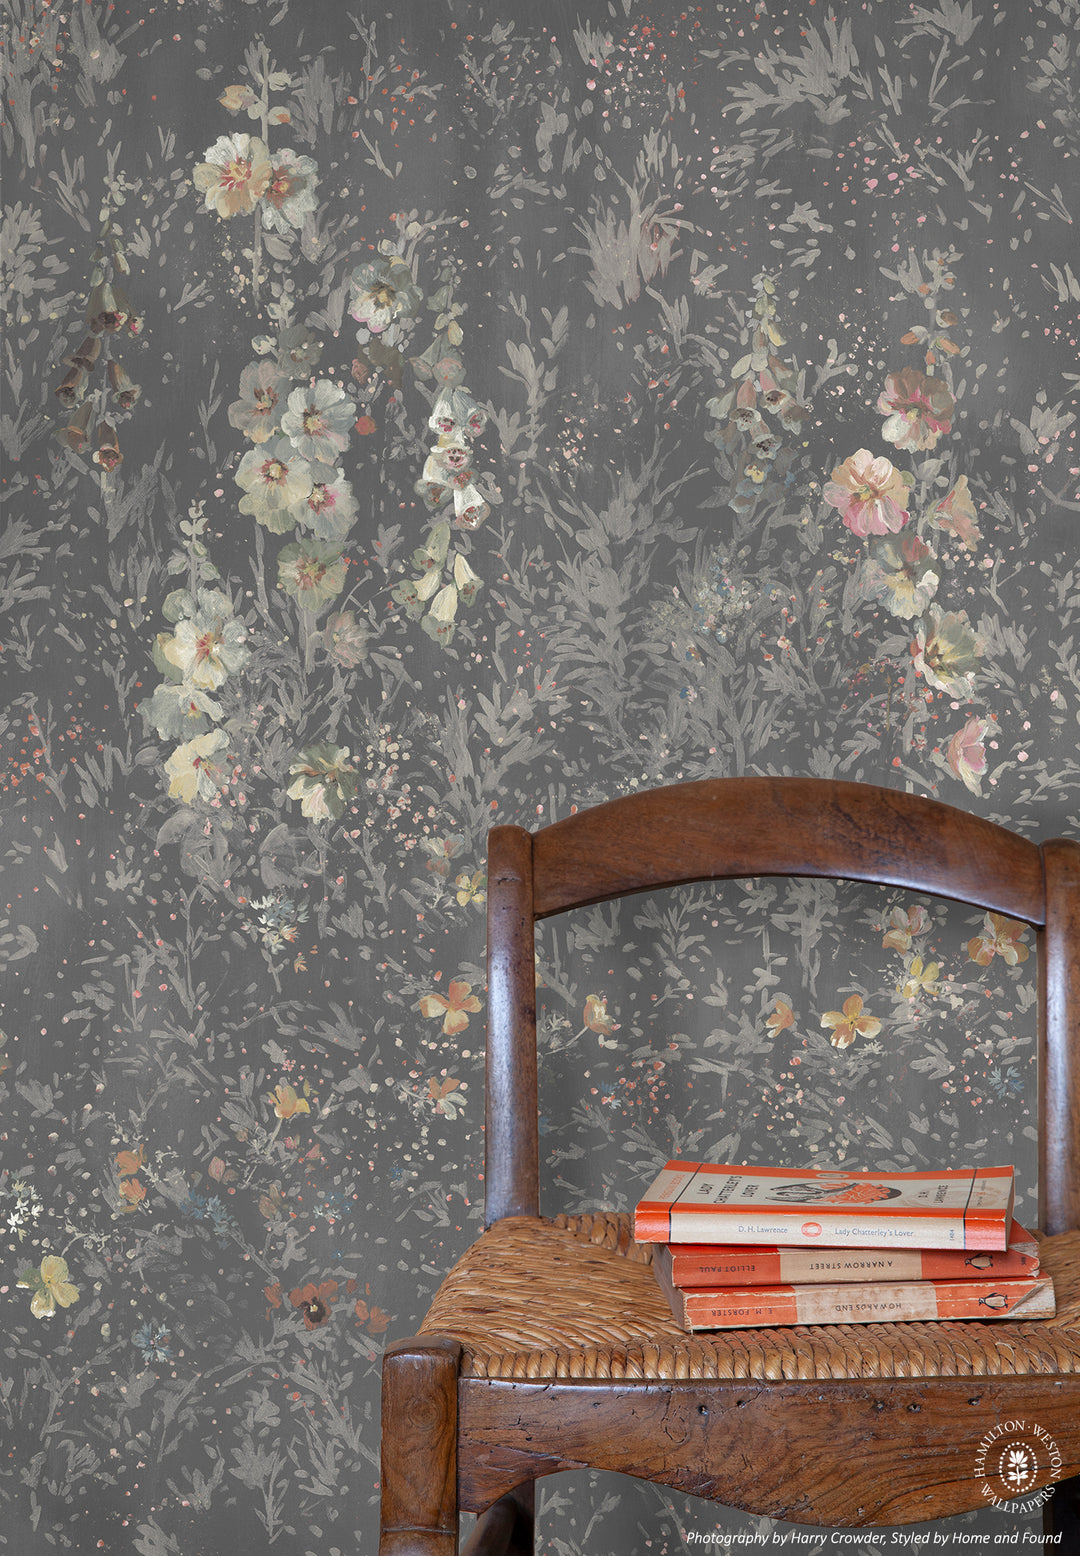 Flora-Roberts-wallpaper-Hamilton-Weston-mightnight-garden-twinkling-flowers-hand-illustrated-mural-foxgloves-black-background-pastel-tones-faded-background-02-Autumn